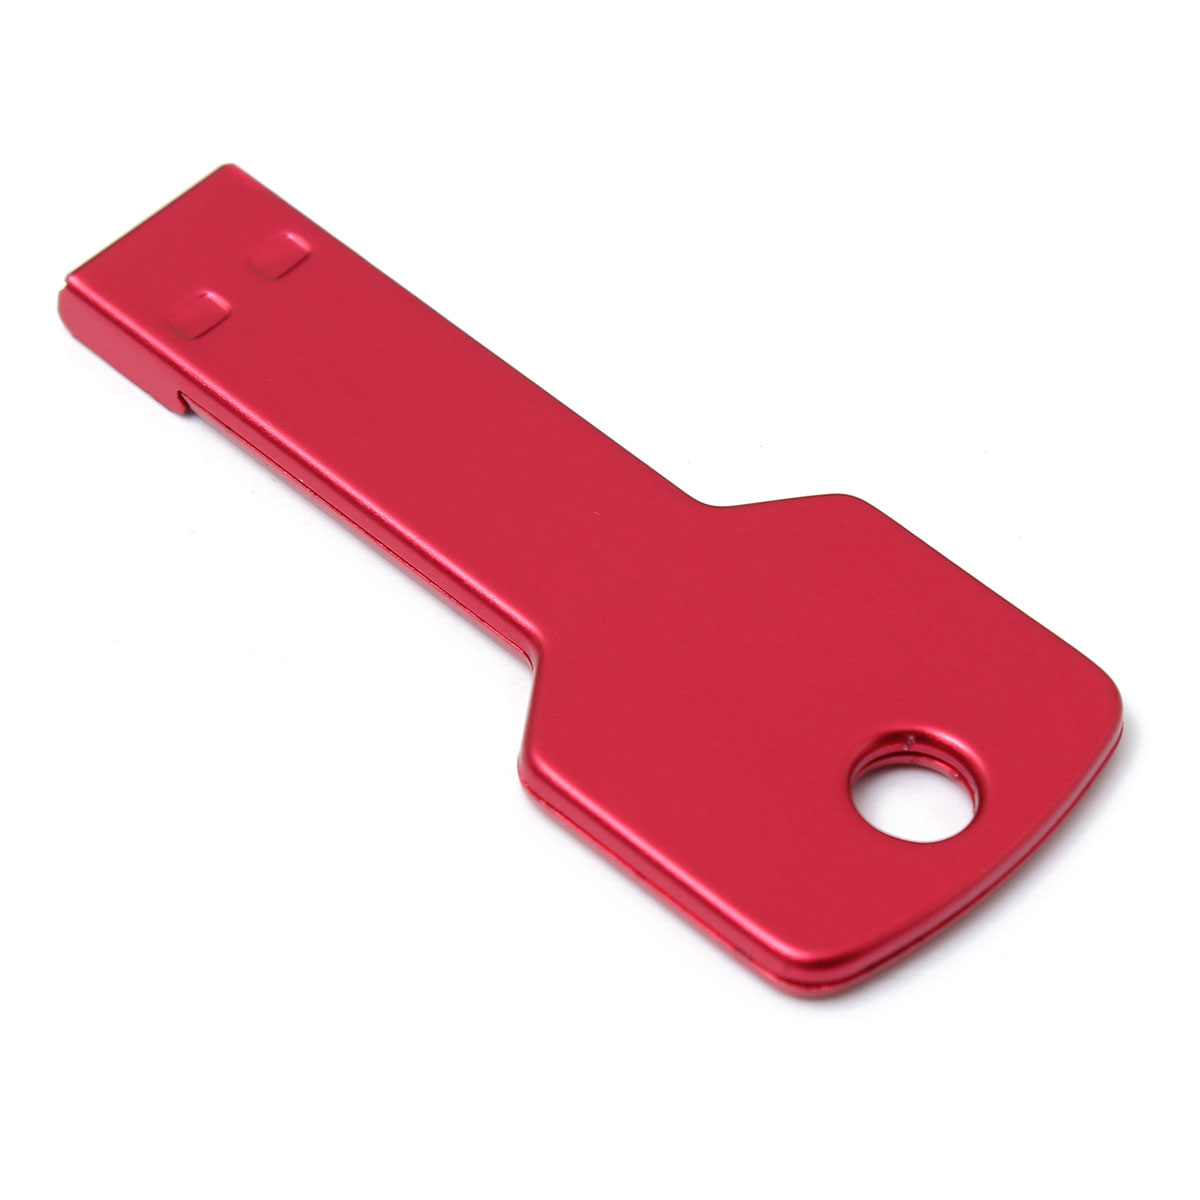 Bestrunner 2GB USB Metal Key Drive Flash Memory Drive Thumb Design 16